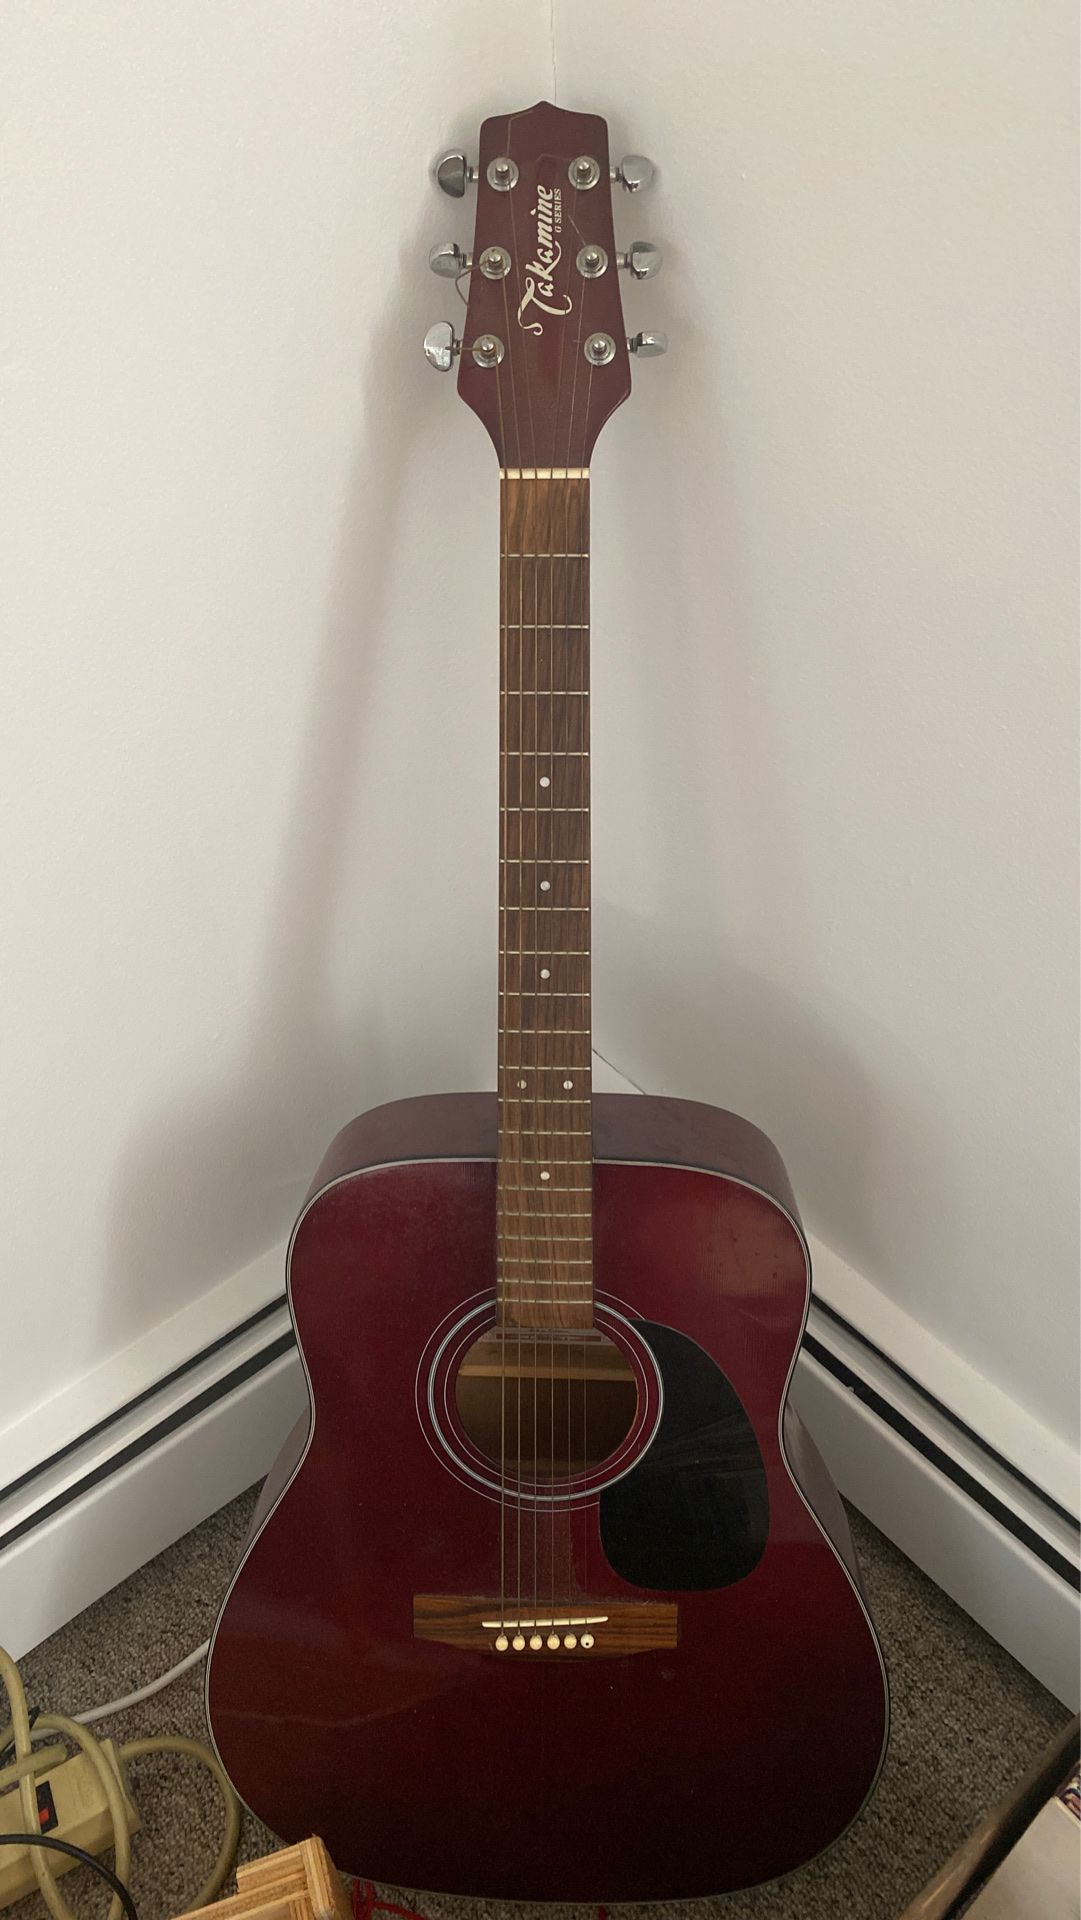 Takamine g series acoustic guitar